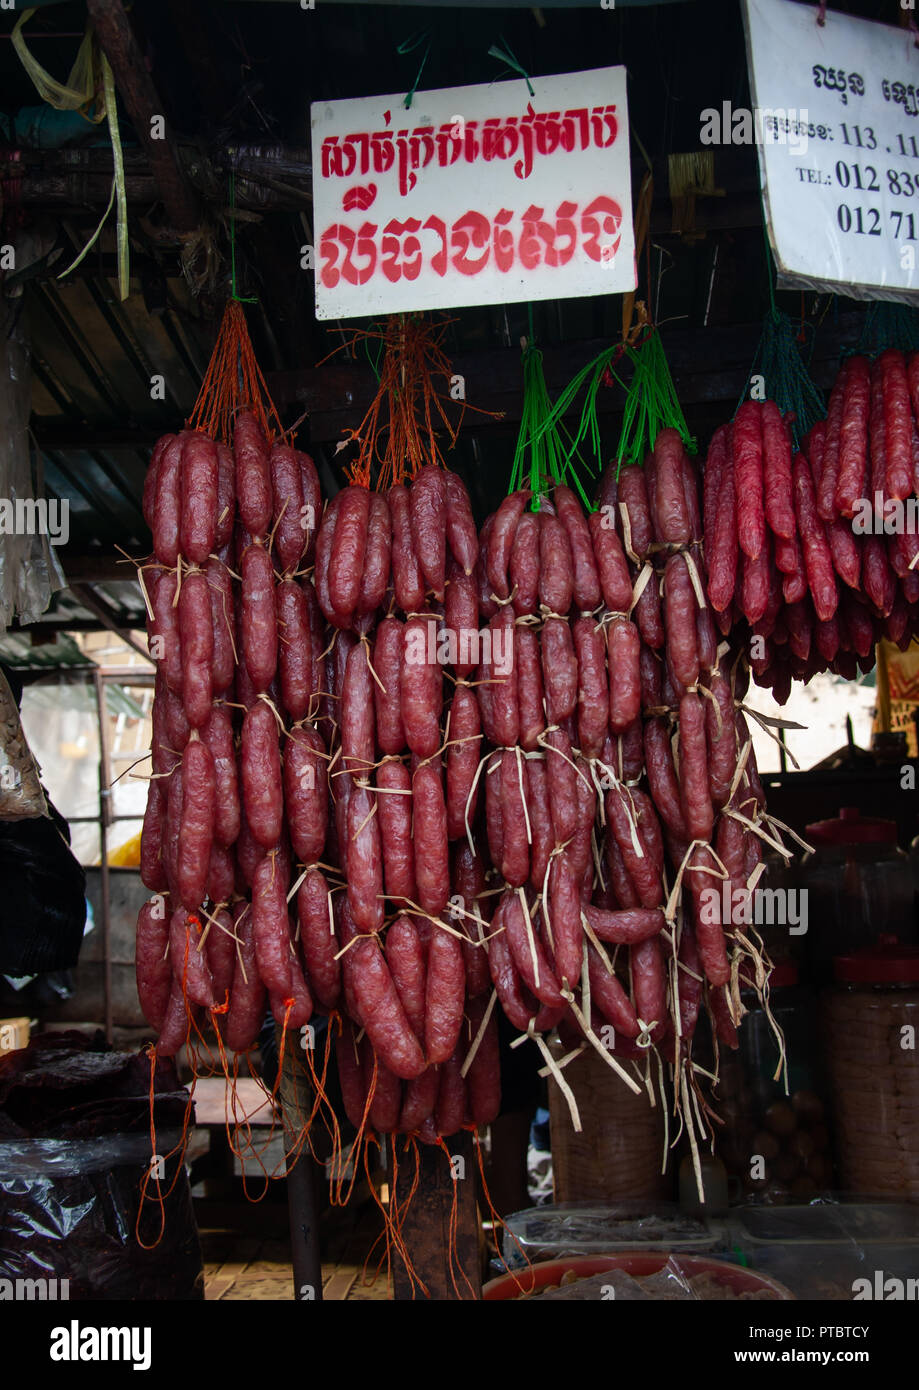 Saussages for sale inside a local market, Phnom Penh province, Phnom Penh, Cambodia Stock Photo